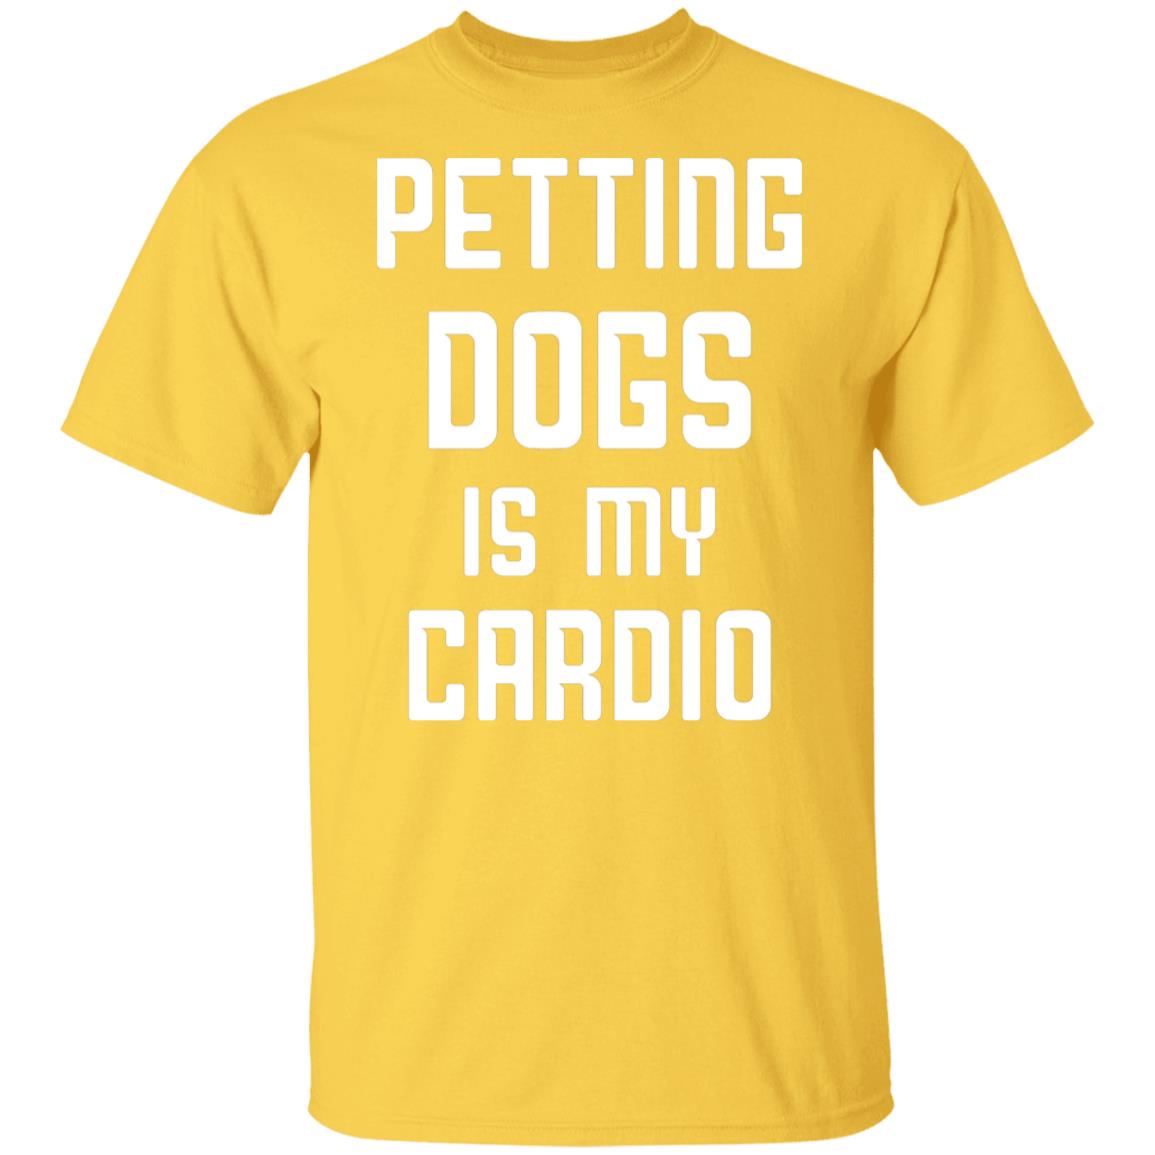 Petting dogs is my cardio tshirt